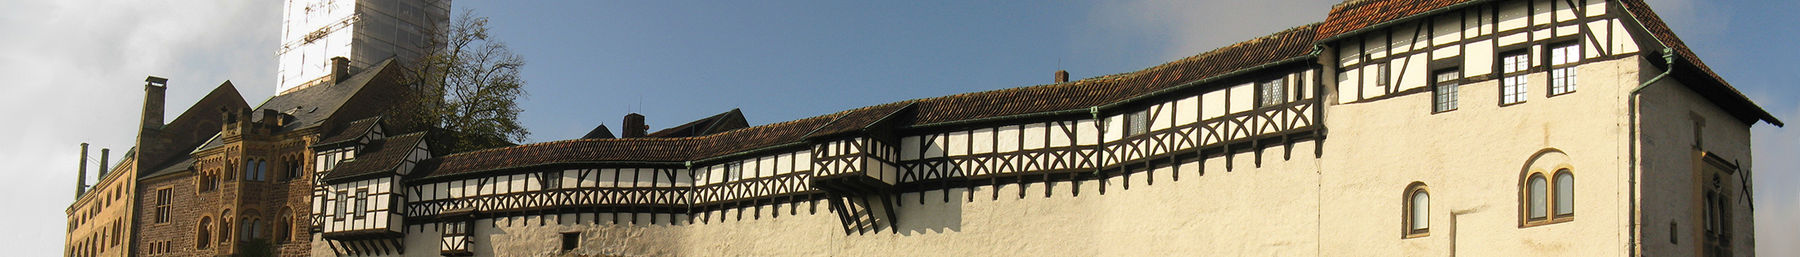 Wartburg Castle banner.jpg